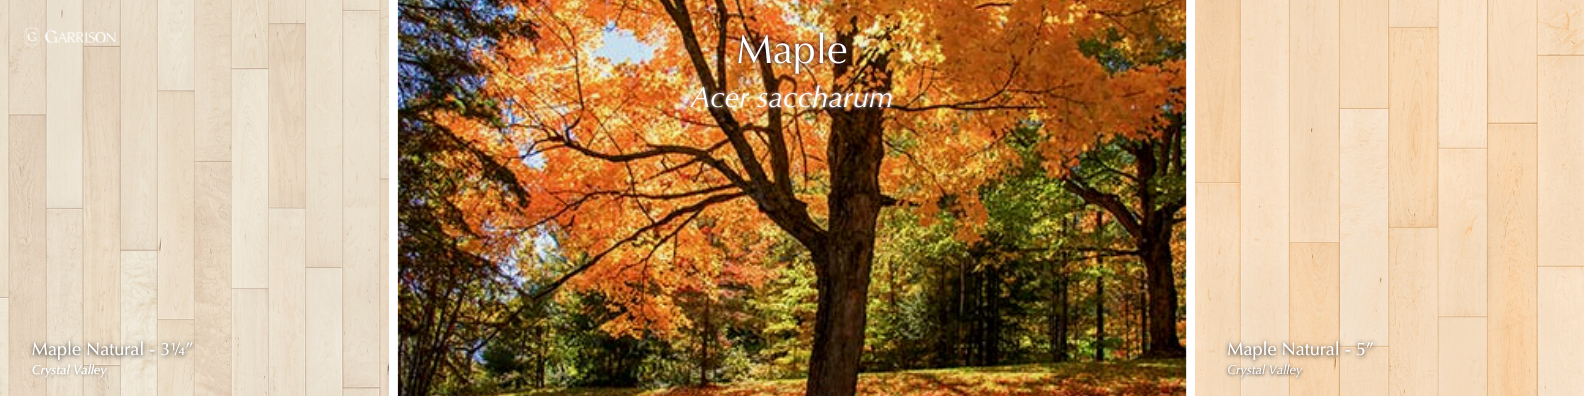 Maple - 7 Most Popular Hardwood Species - Garrison Collection